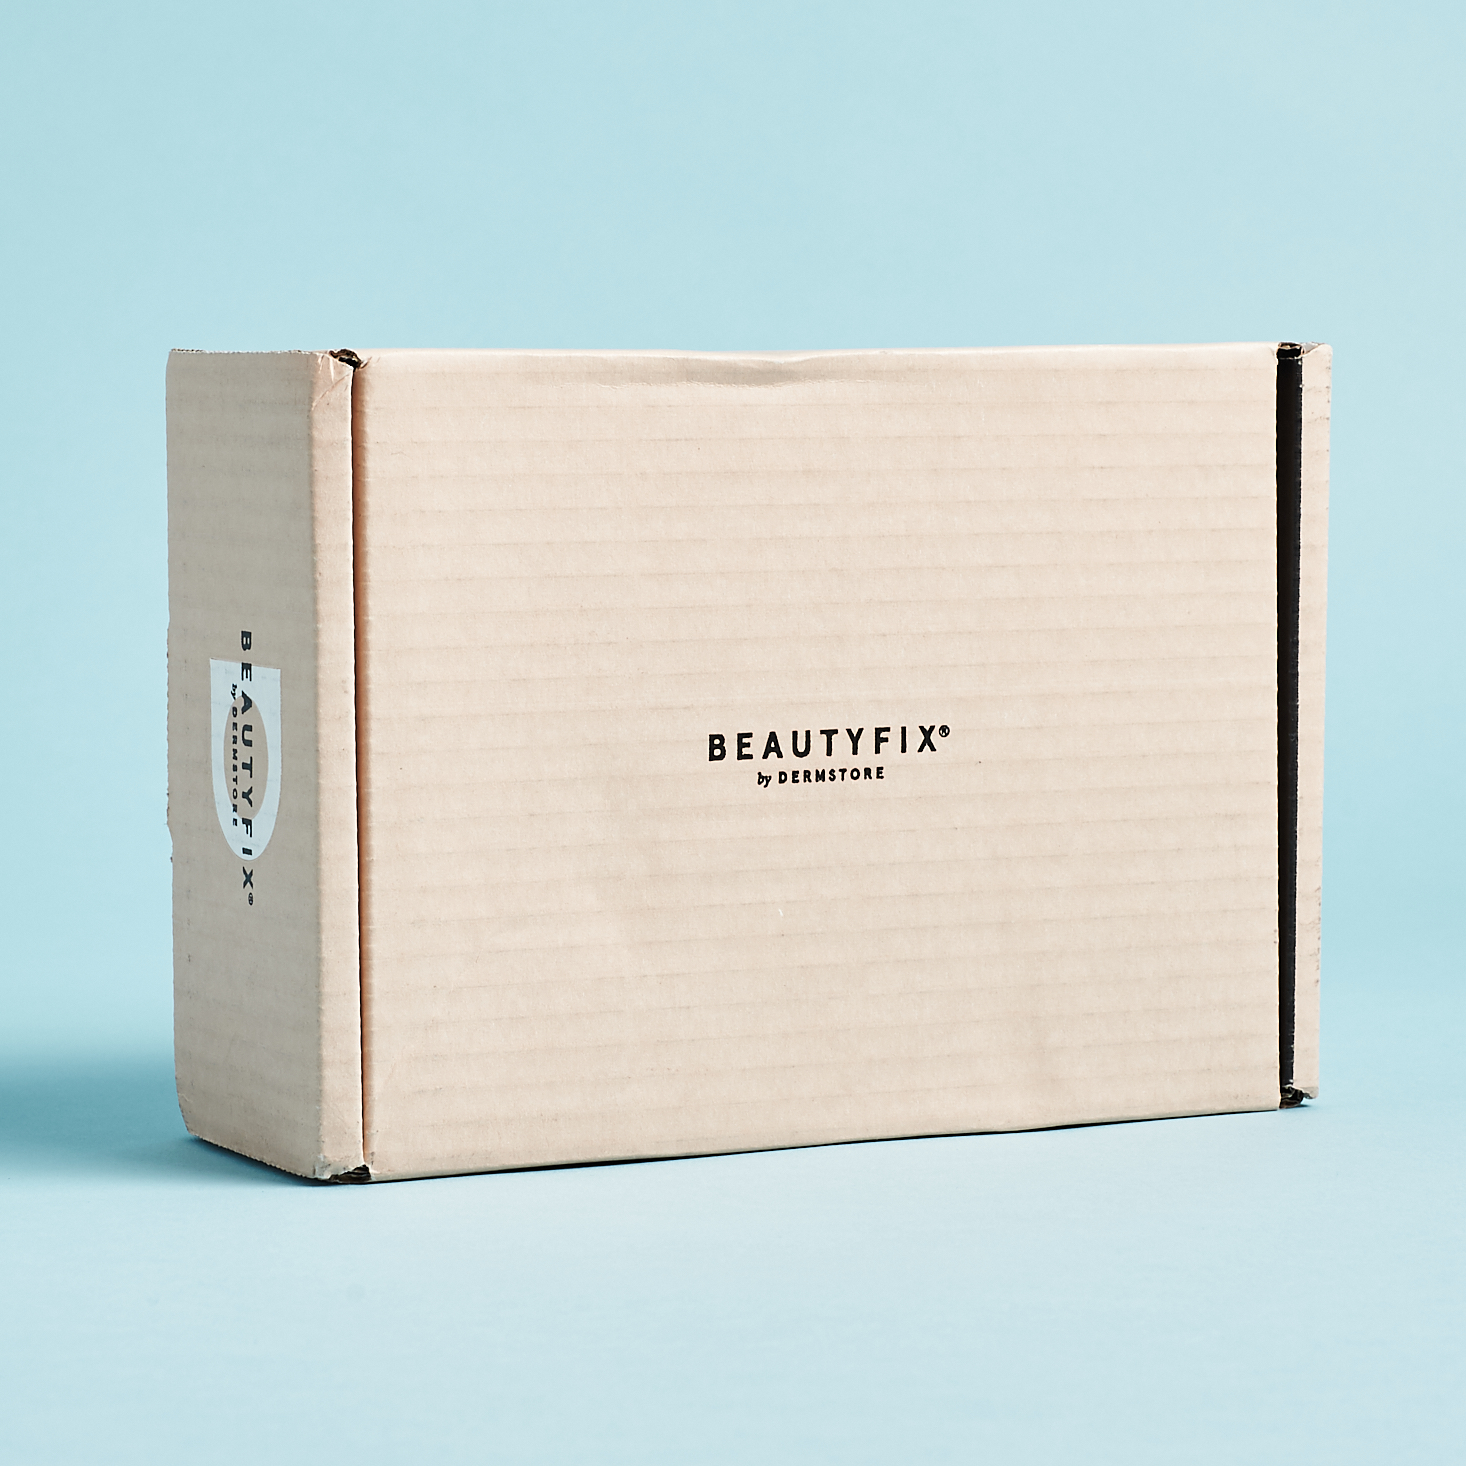 BeautyFIX Subscription Box Review – January 2020